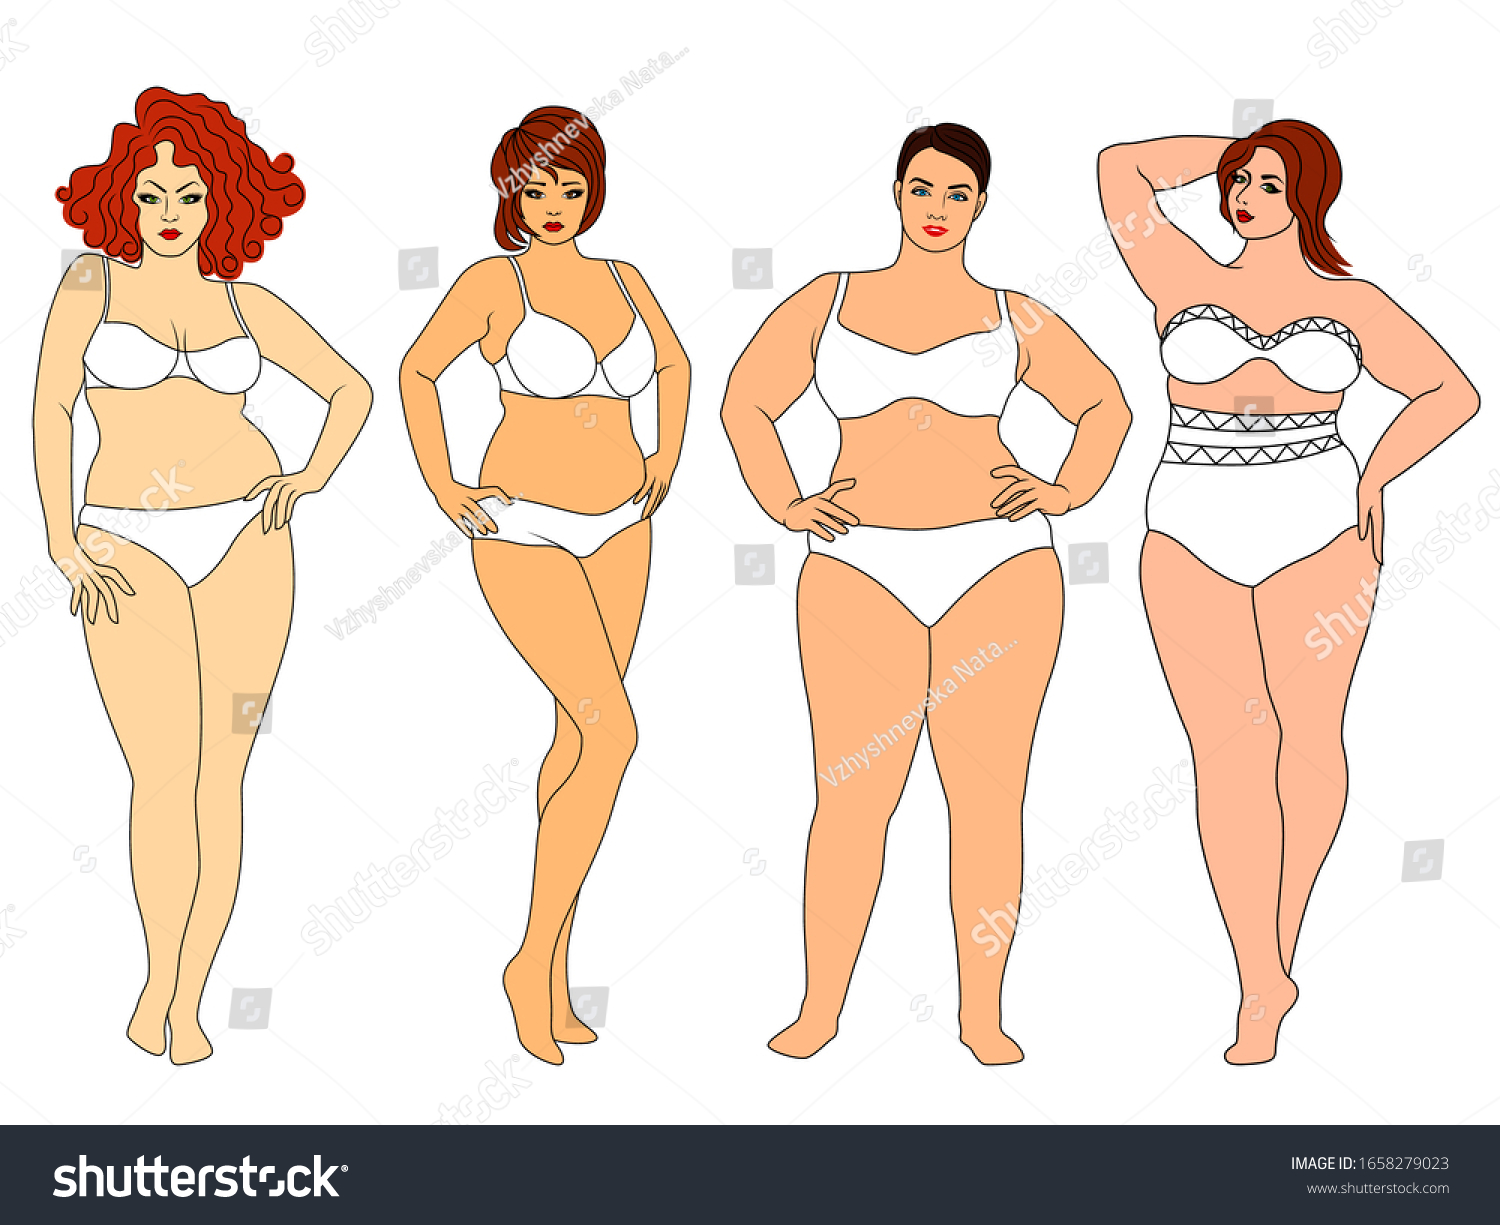 Four Charming Fat Women Underwear Isolated: стоковые изображения в HD и мил...